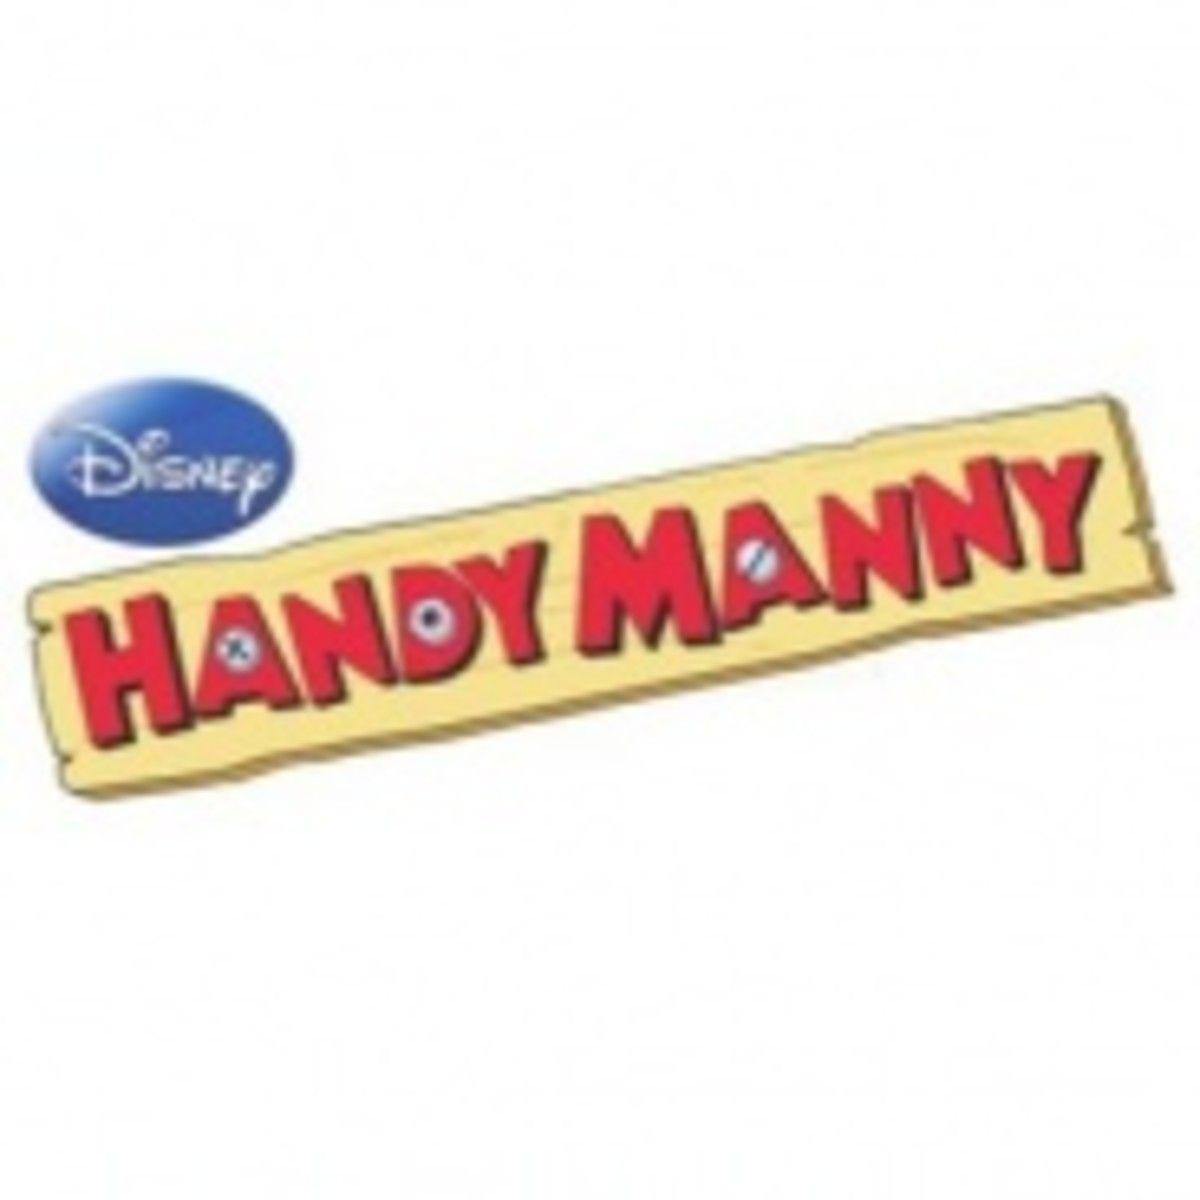 Handy Manny Logo - HTI now adds Handy Manny - ToyNews